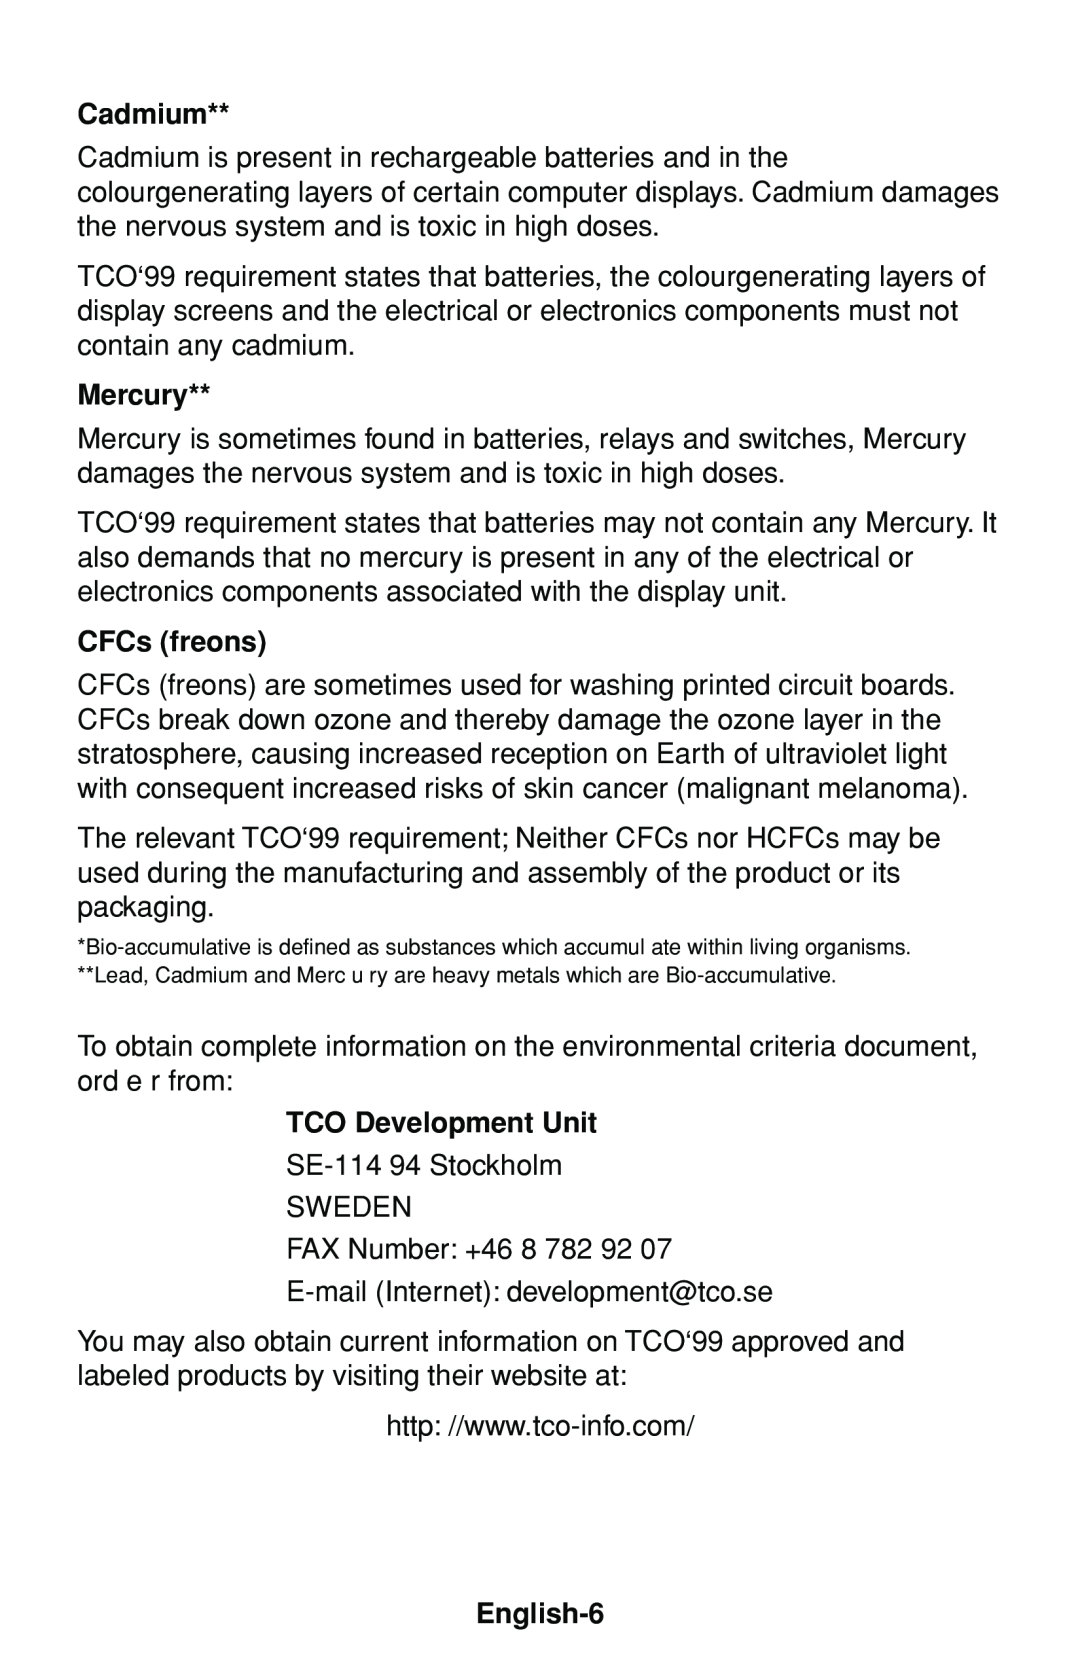 NEC MultiSync 75F user manual Cadmium, Mercury, CFCs freons, TCO Development Unit, English-6 